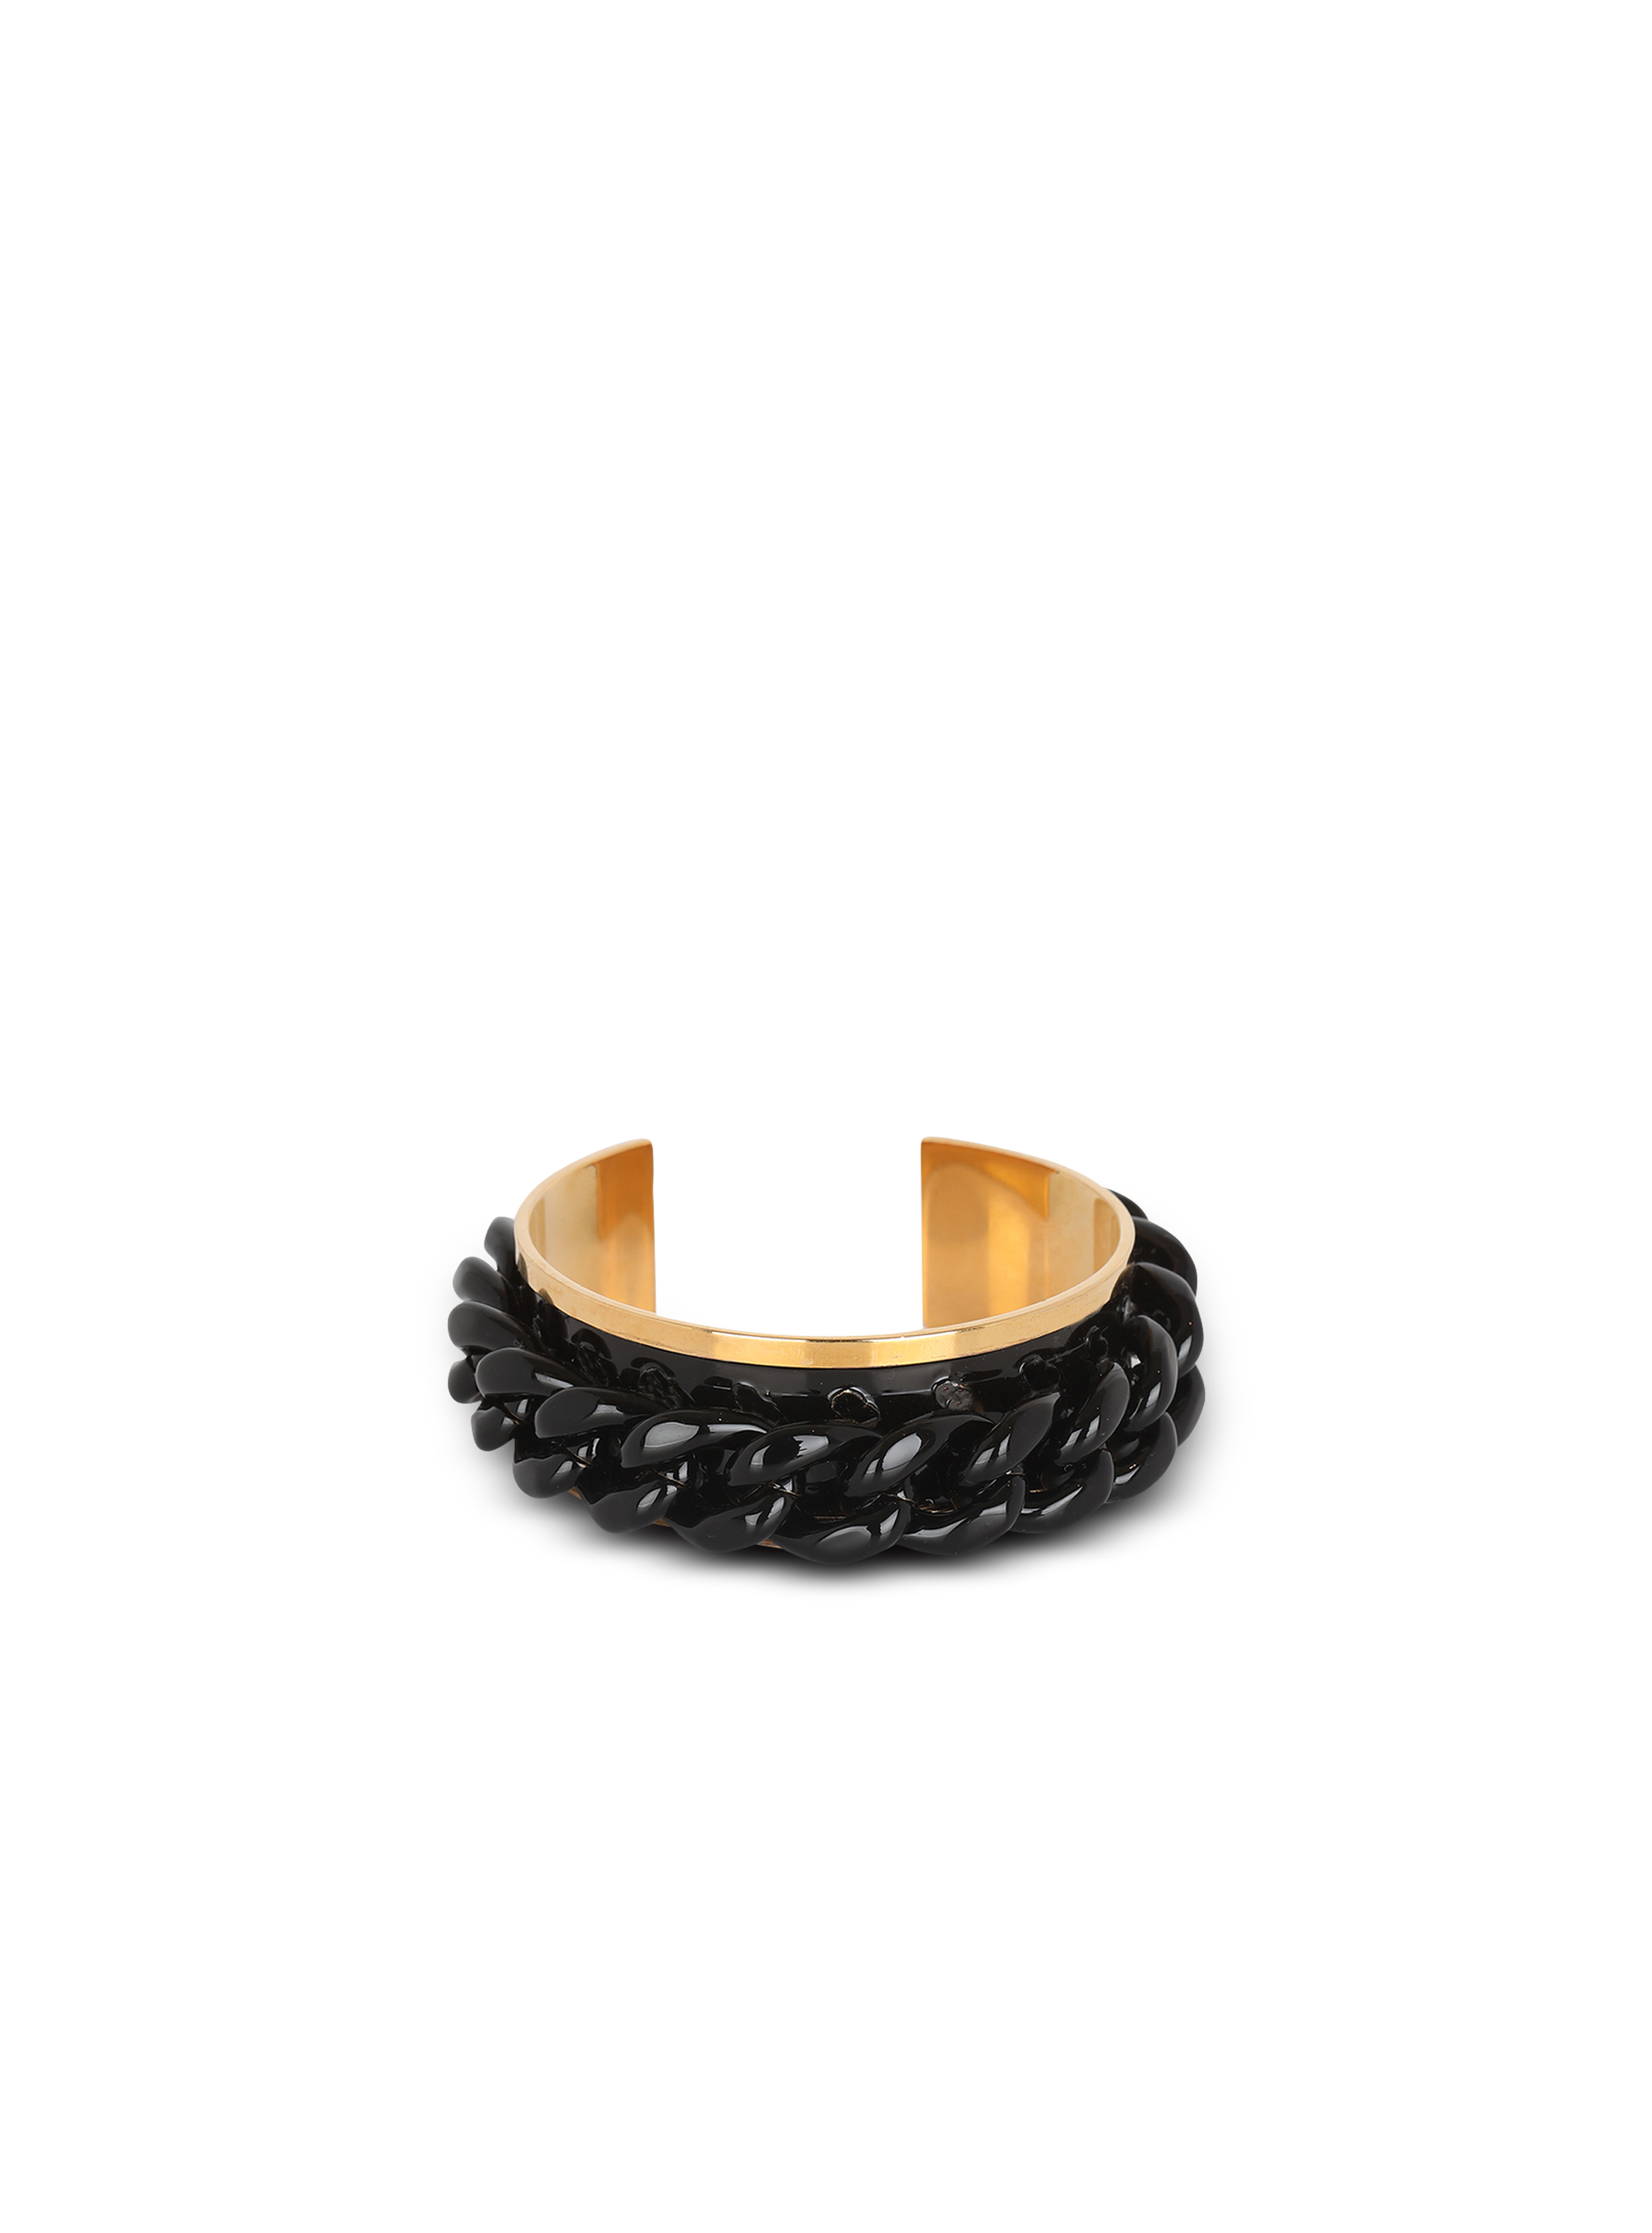 Brass chain cuff bracelet, black